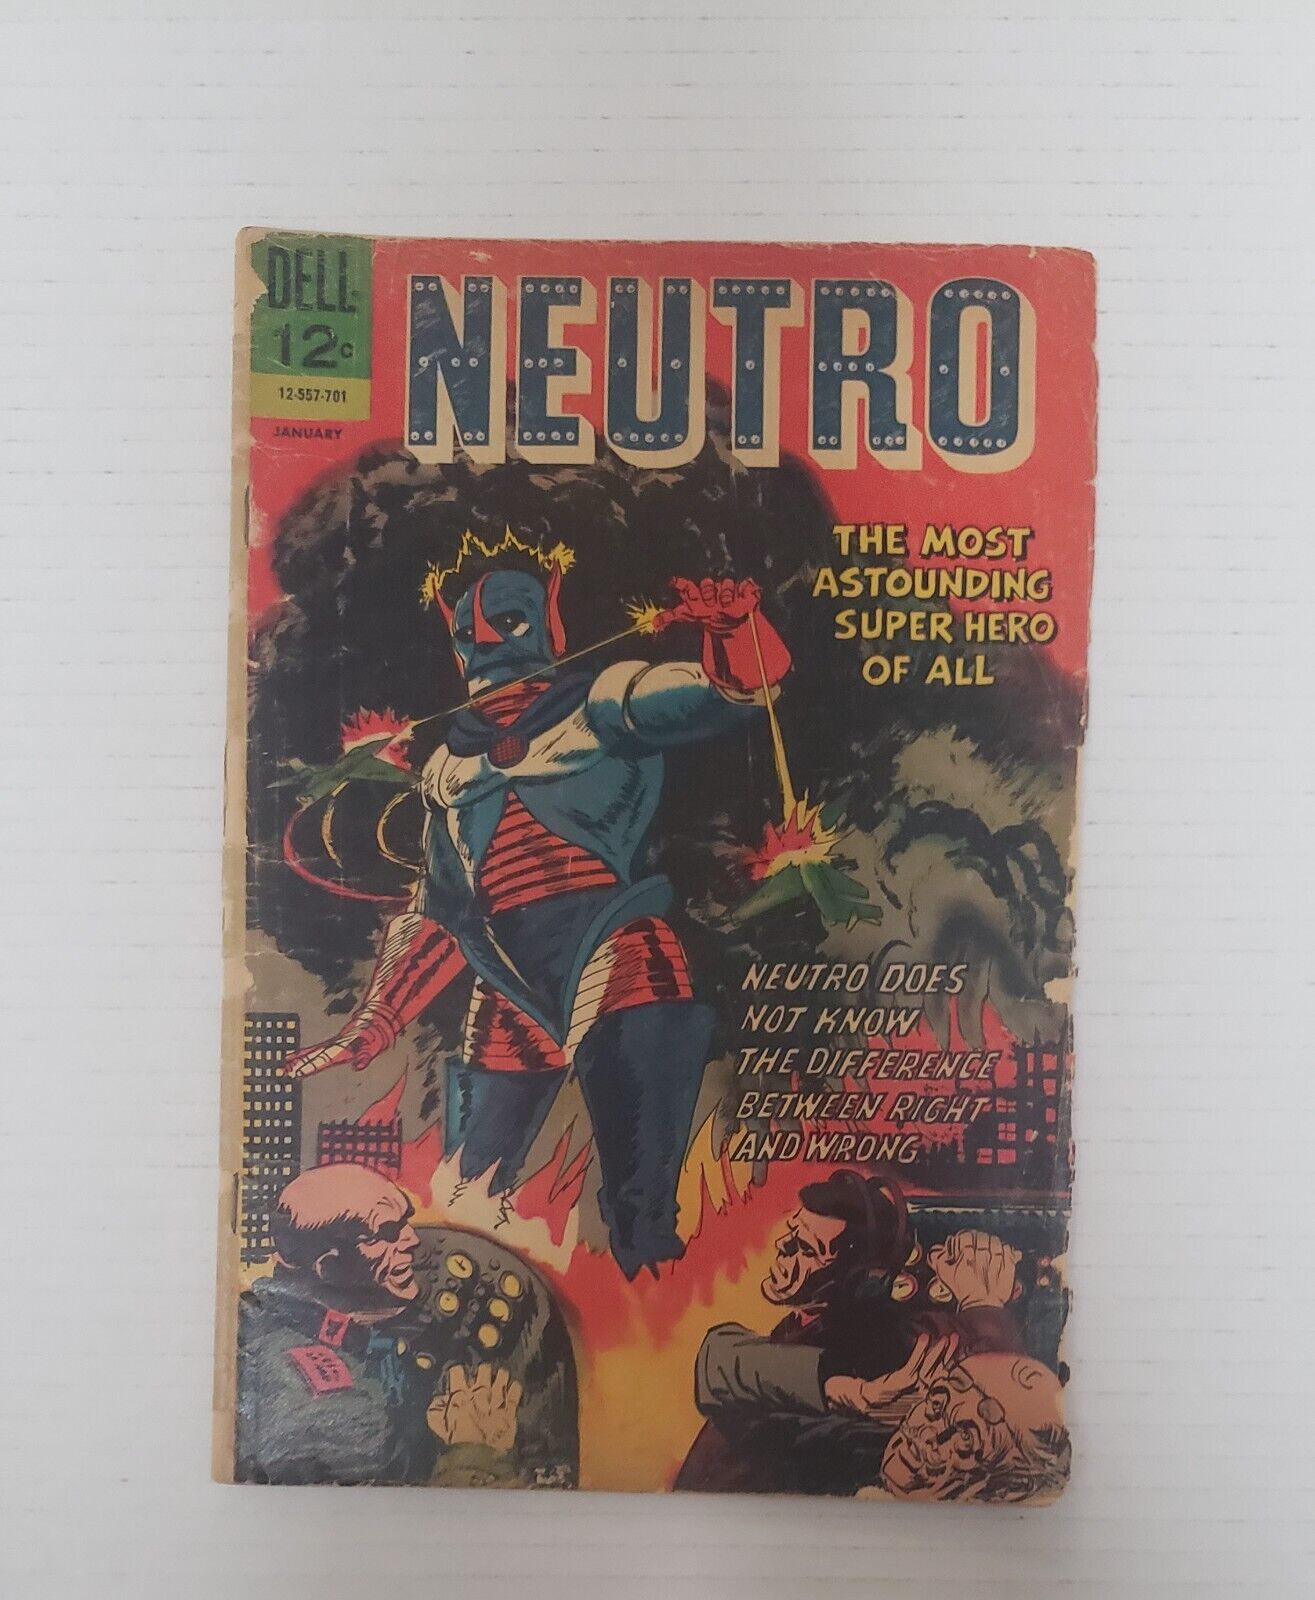 Neutro #1 Dell Comics Jan 1967 Vintage Superhero 12-557-701 Single Issue